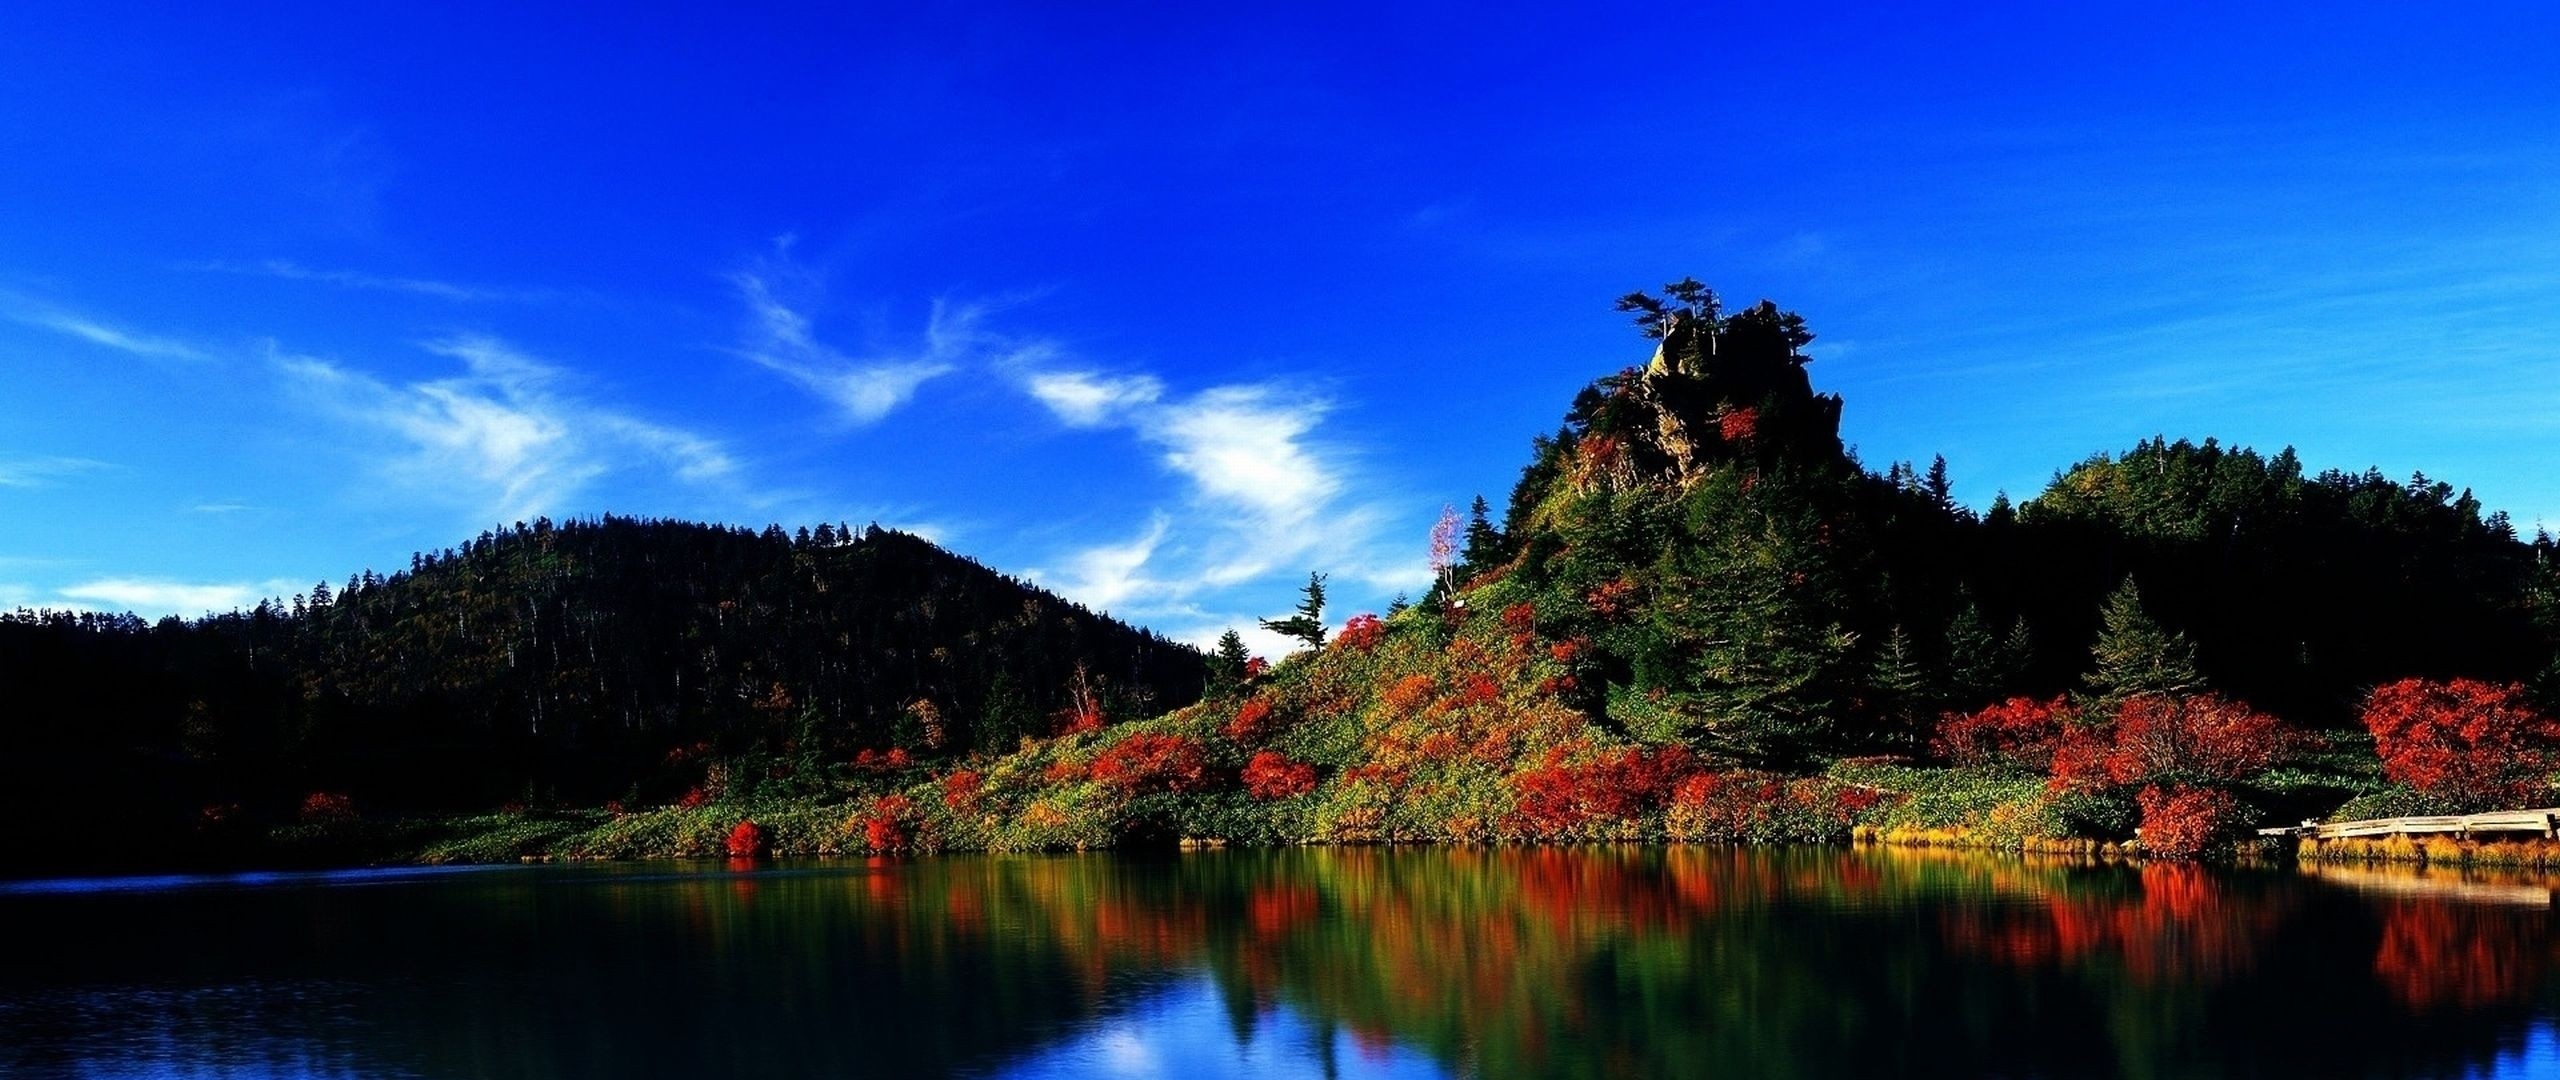 japanese wallpaper,nature,natural landscape,sky,reflection,water